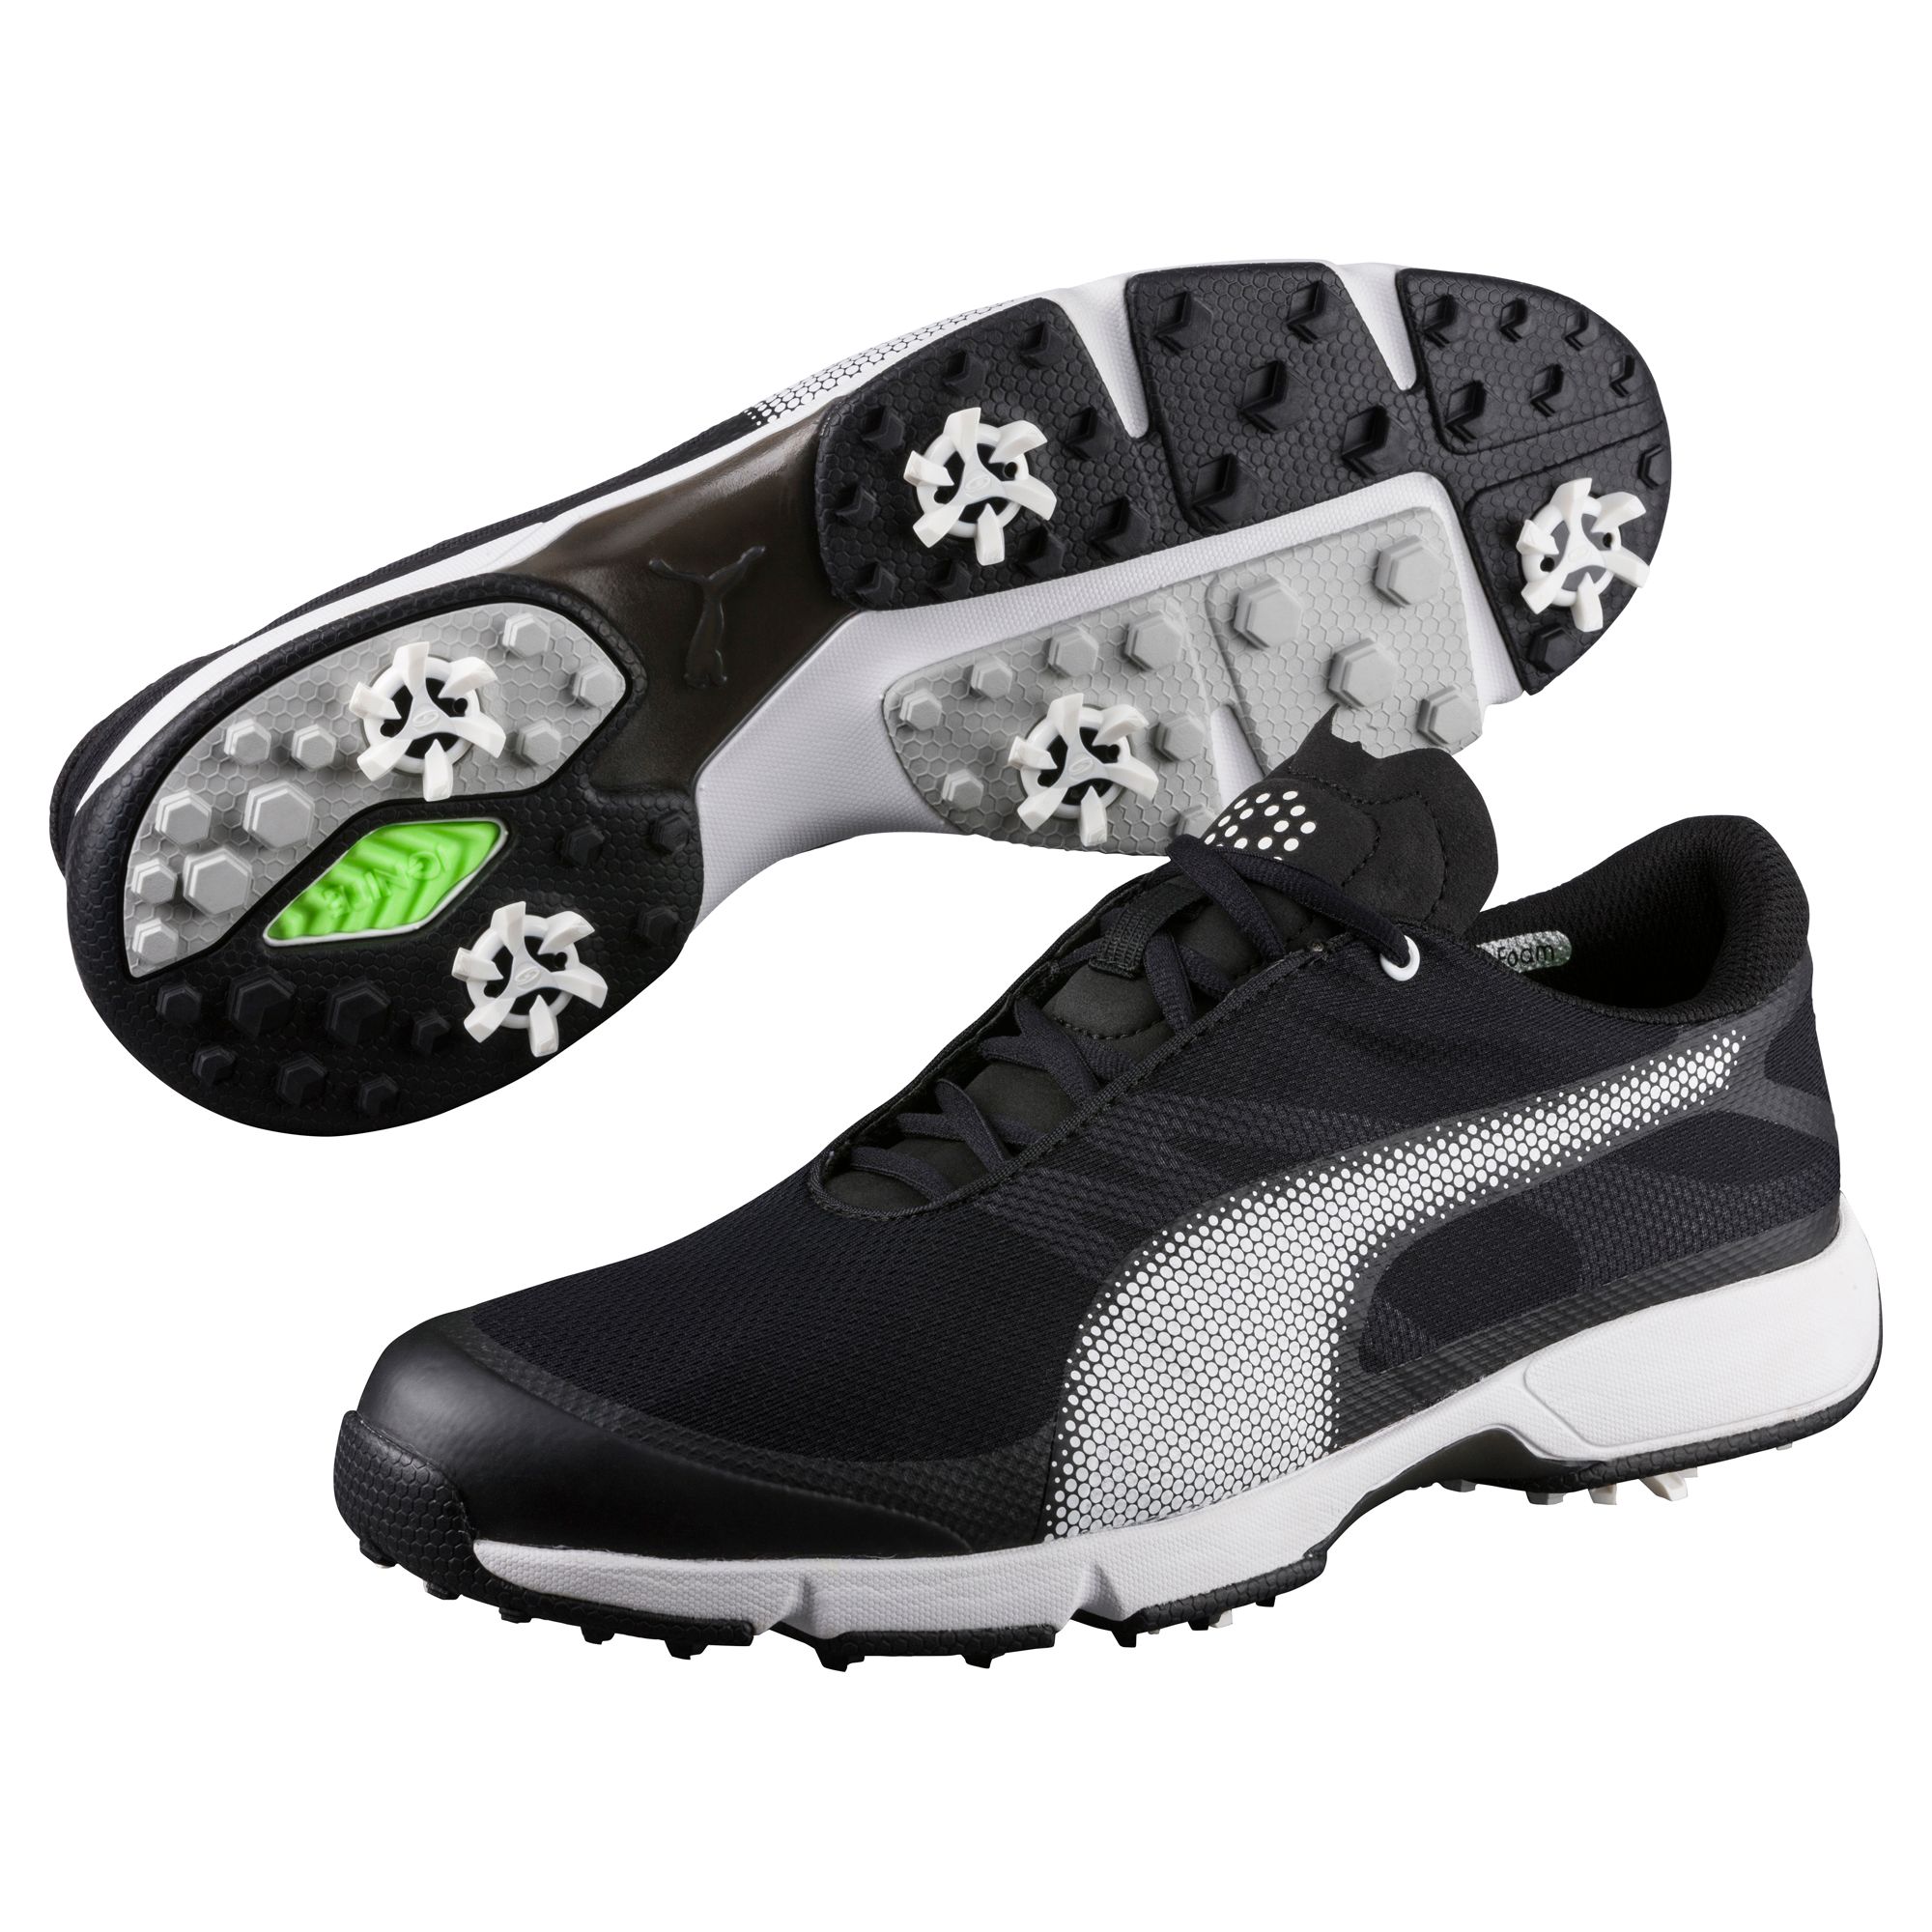 puma ignite drive sport golf shoes